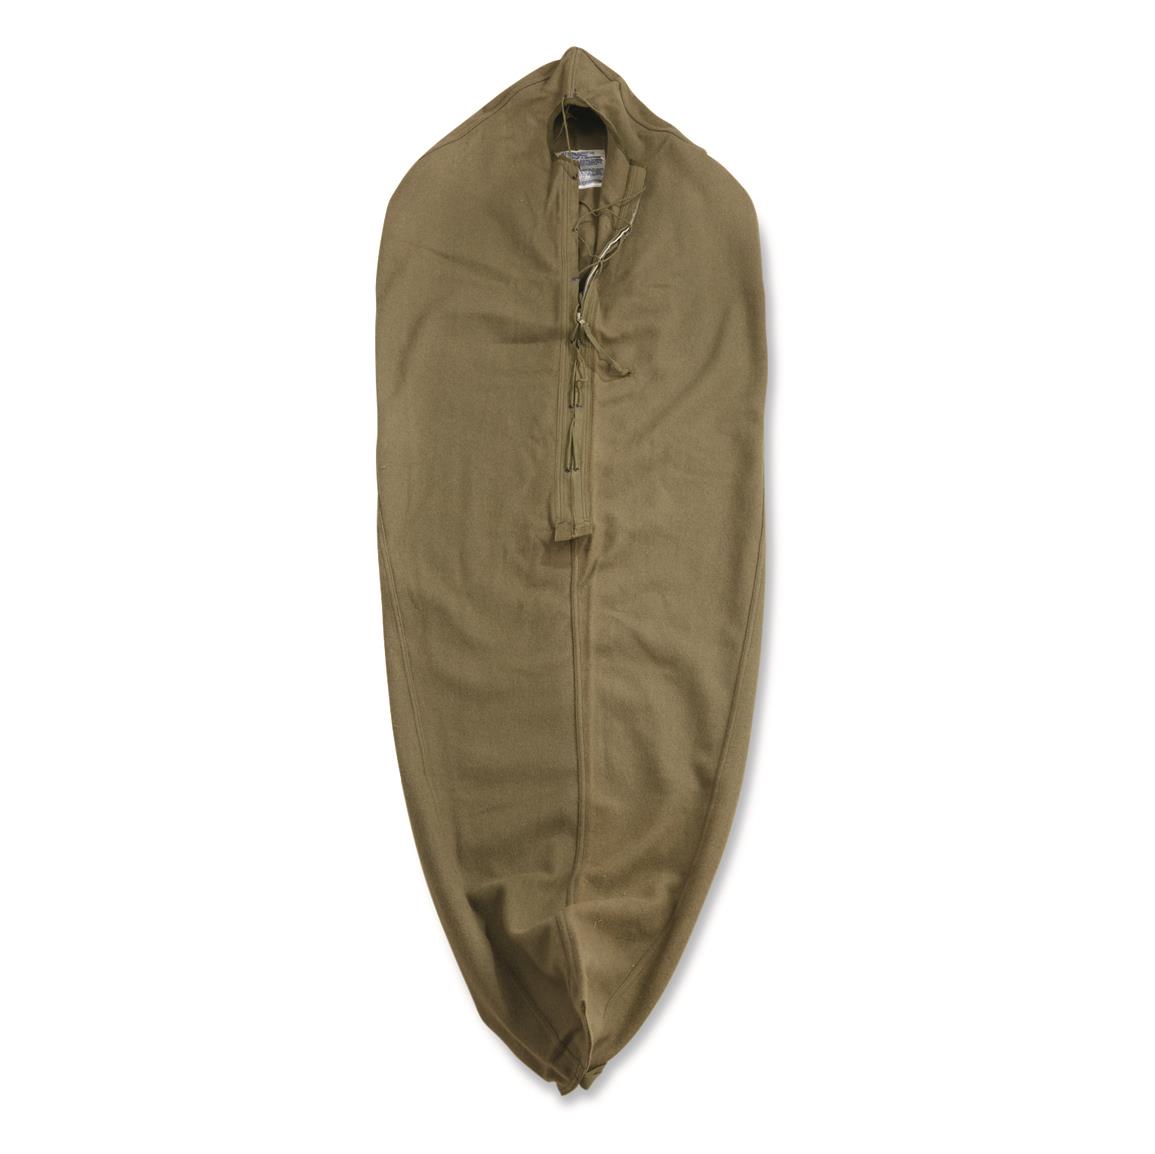 Greek Military Surplus U.S. WWII Style Wool Sleeping Bag, Like New, Olive Drab